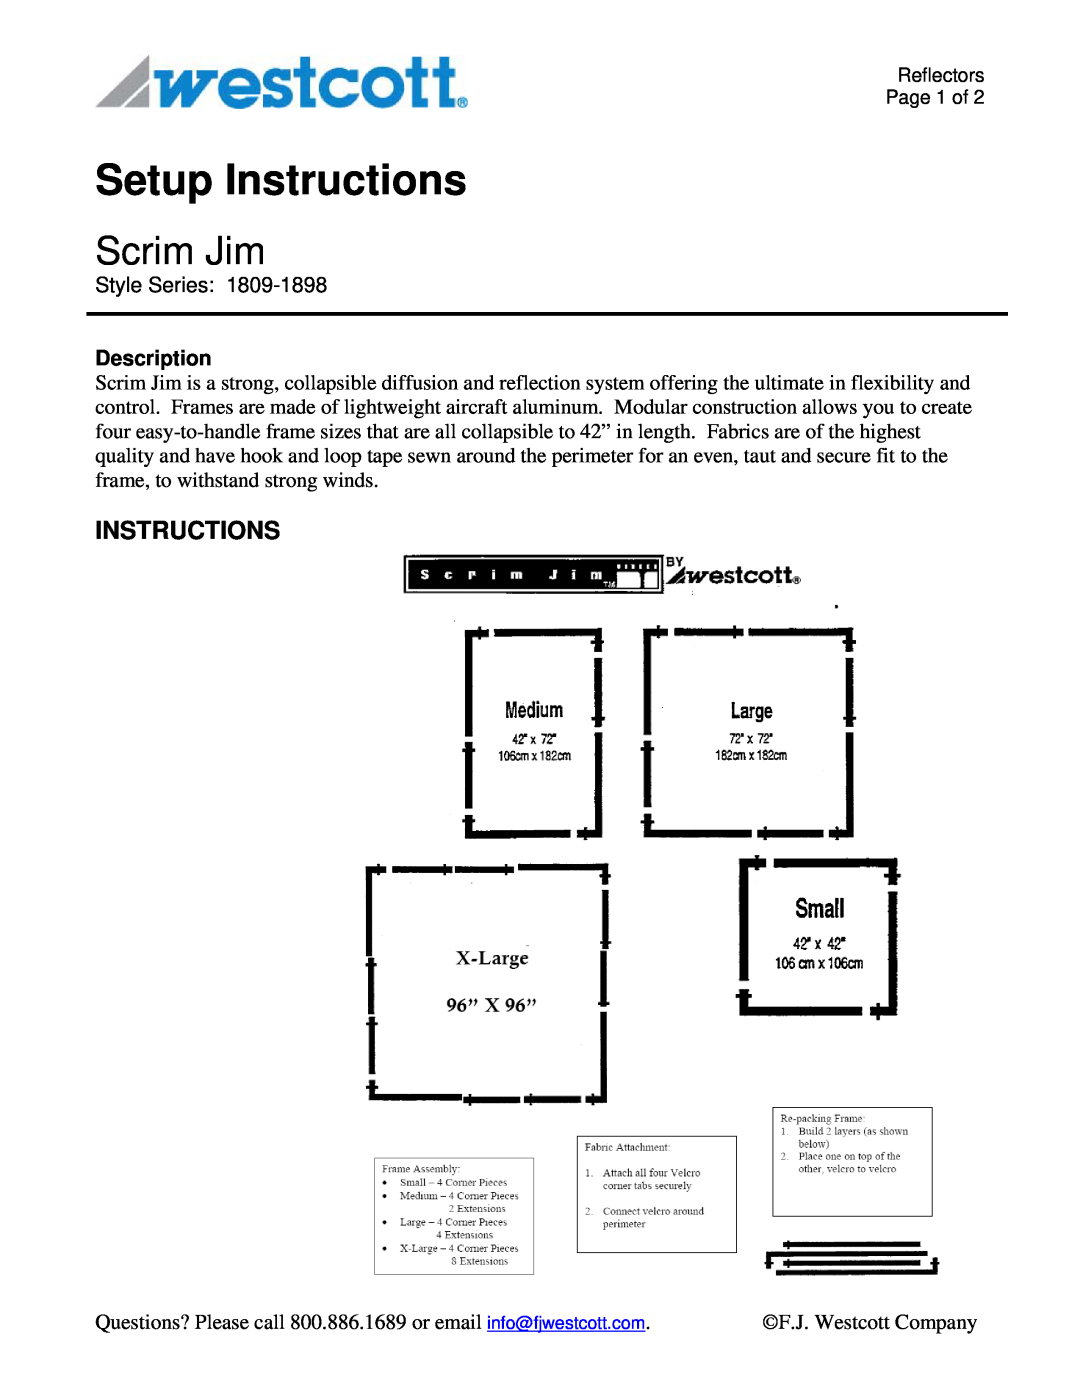 Westcott 1815 manual Setup Instructions, Scrim Jim, Description 